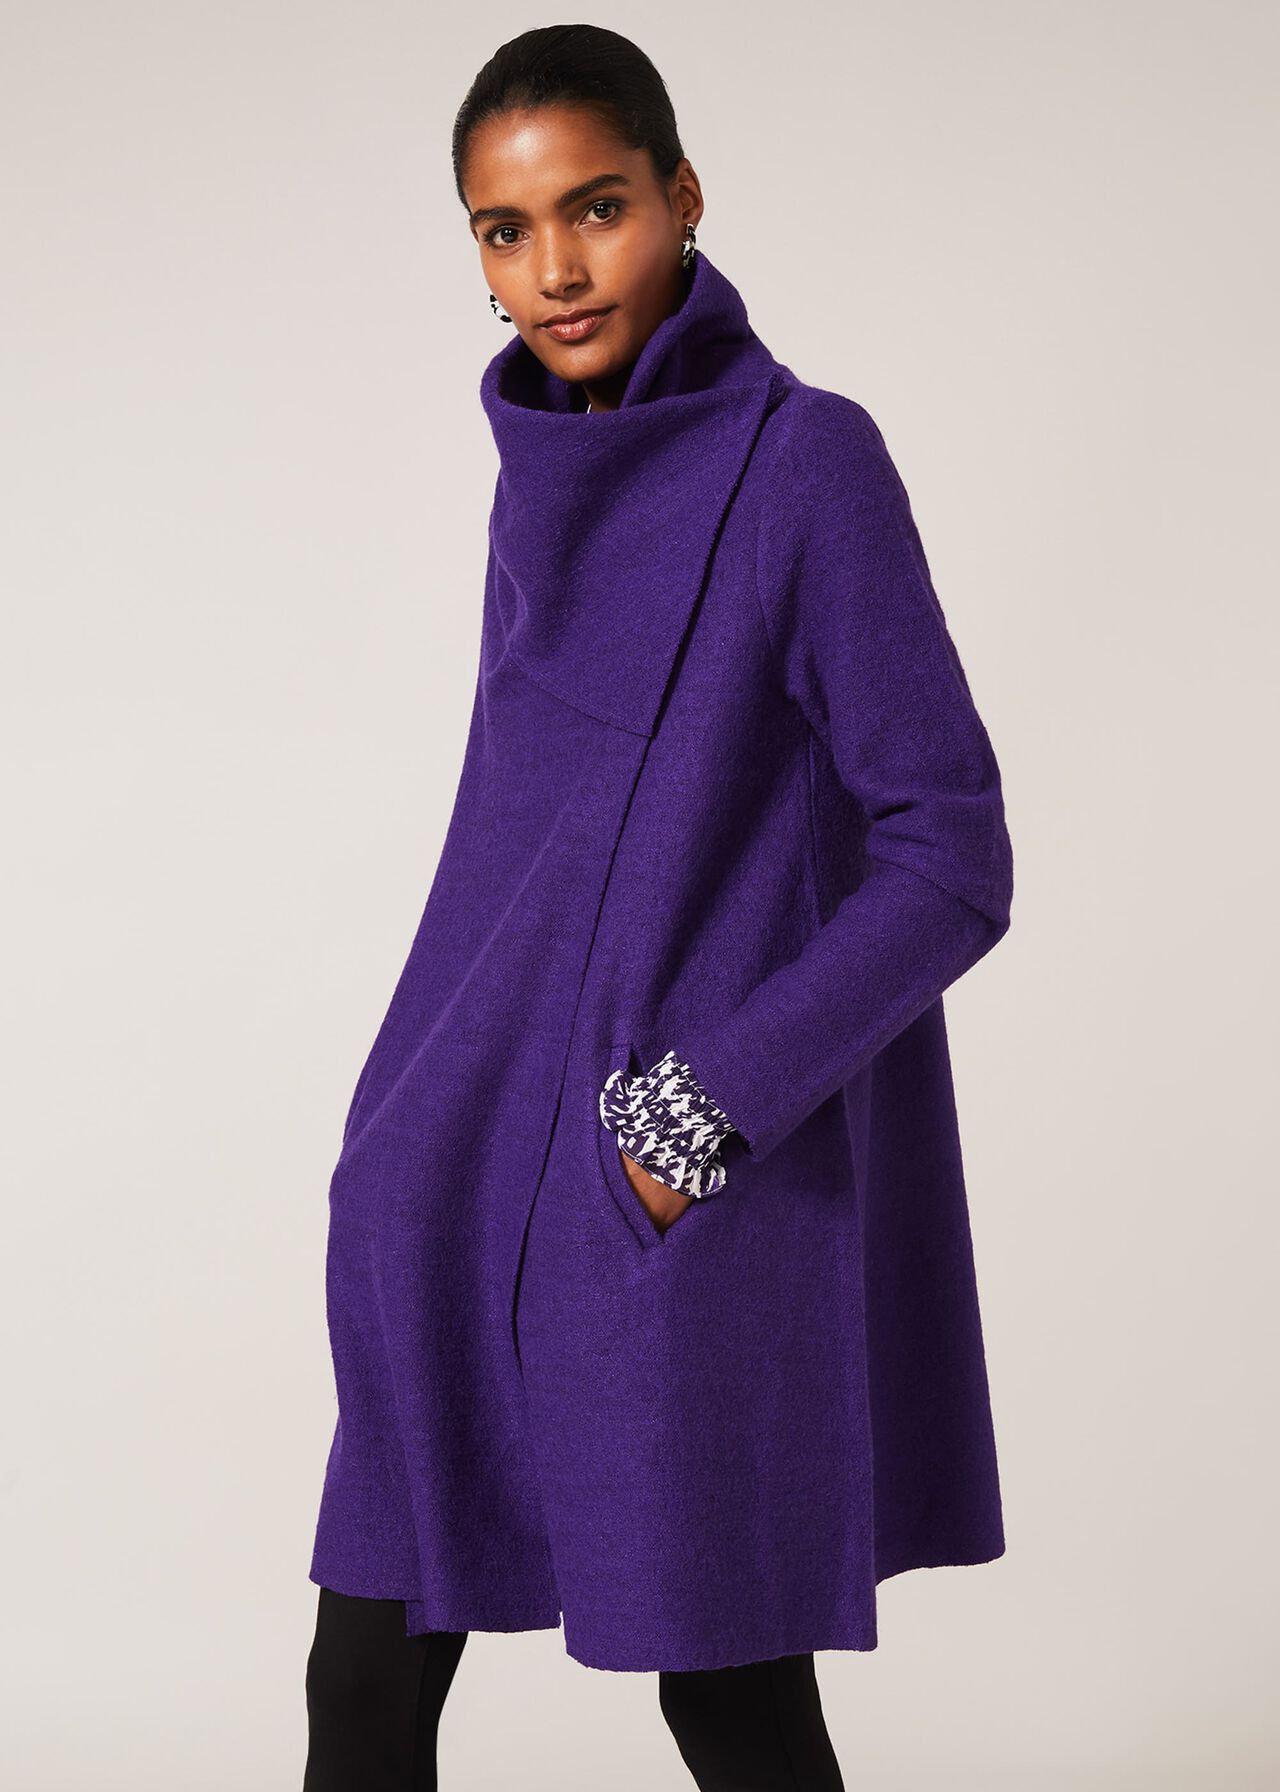 Bellona Knit Coat | Phase Eight